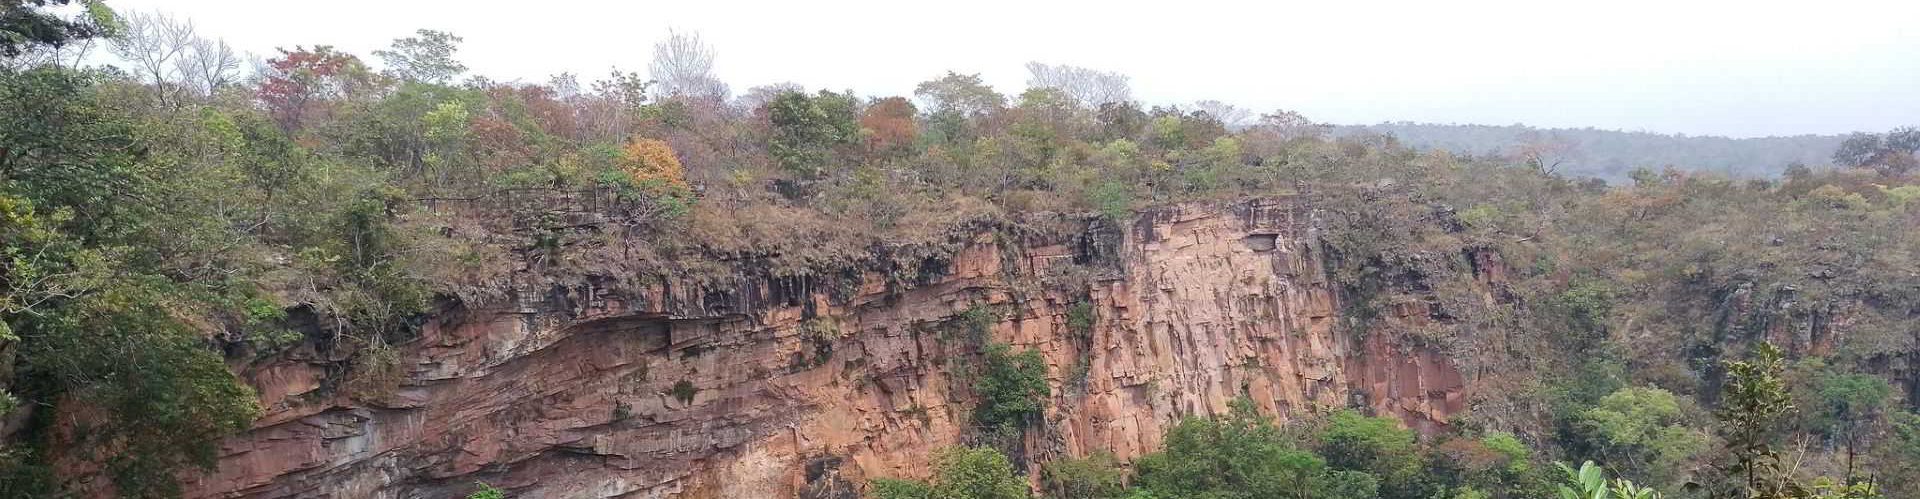 rock cliff in the rainforest, Chapada do Guimaraes, Brazil